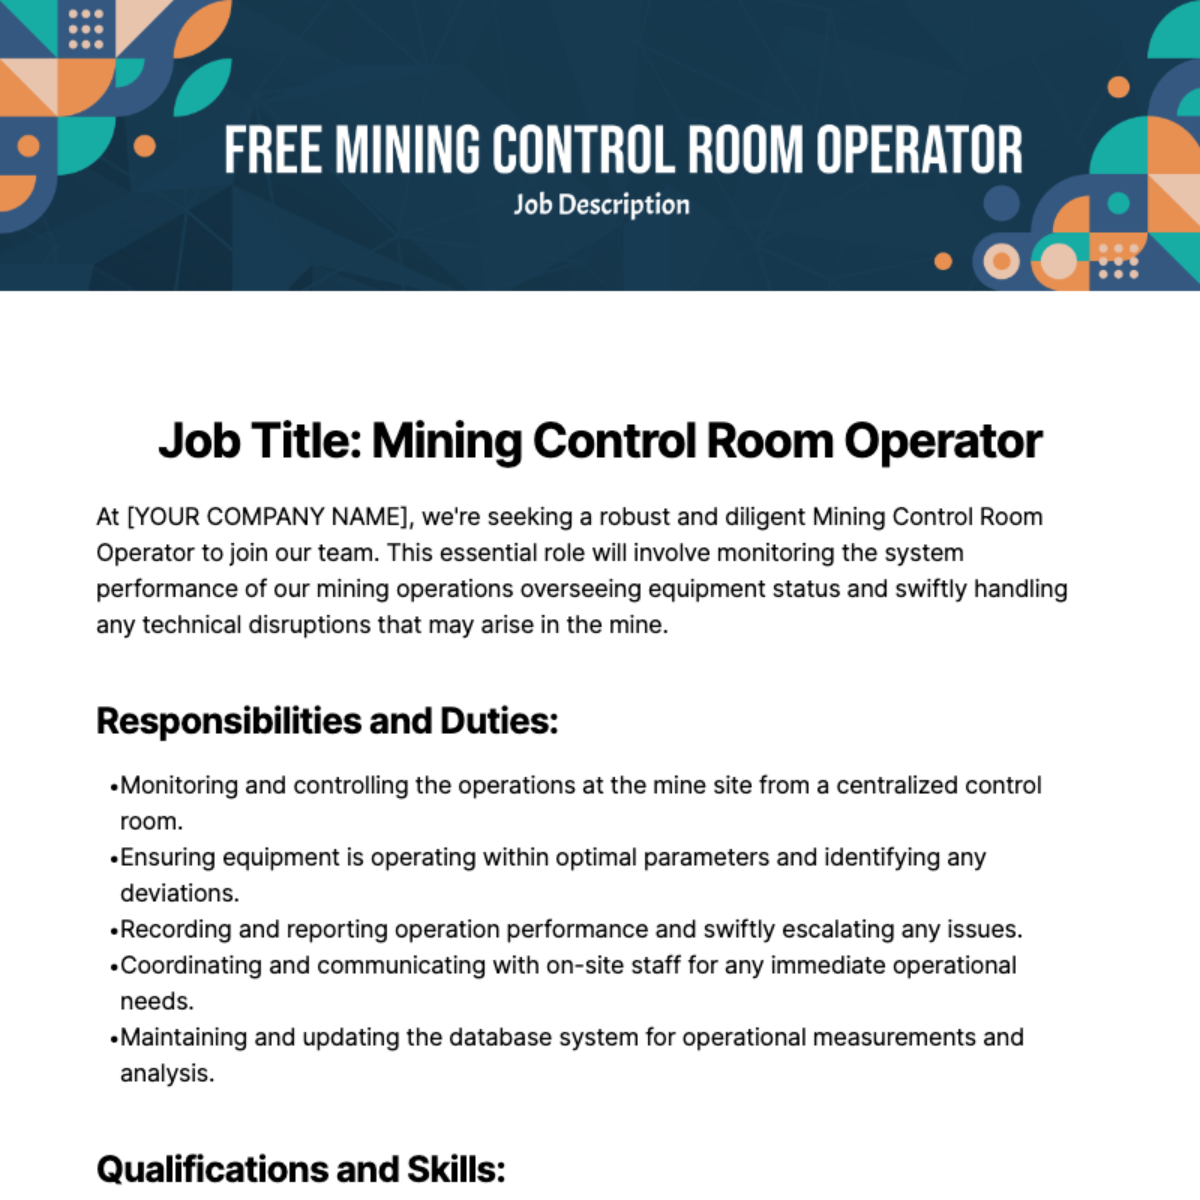 Free Mining Control Room Operator Job Description Template